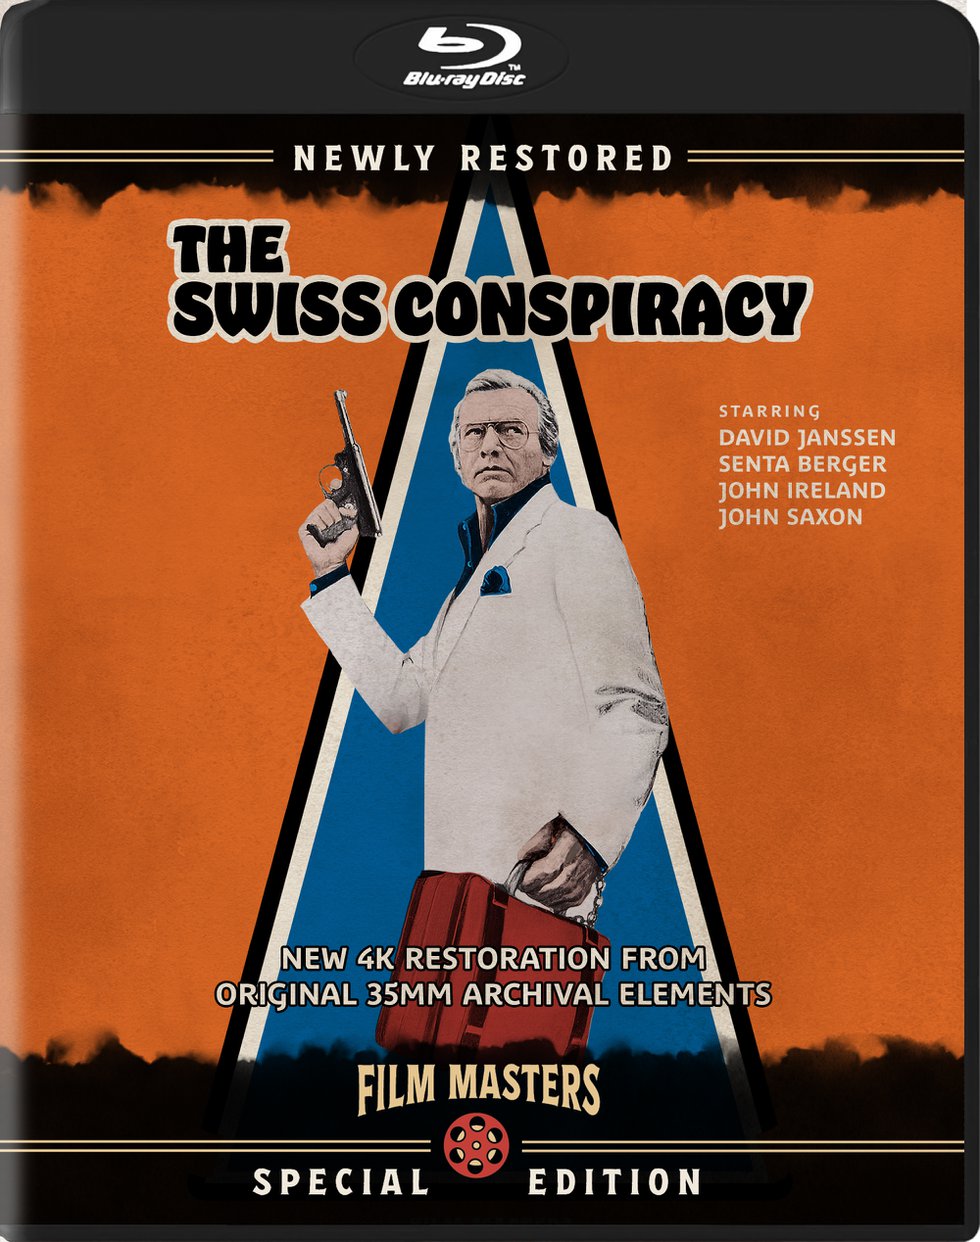 The Swiss Conspiracy BOX ART (Blu-ray).jpg